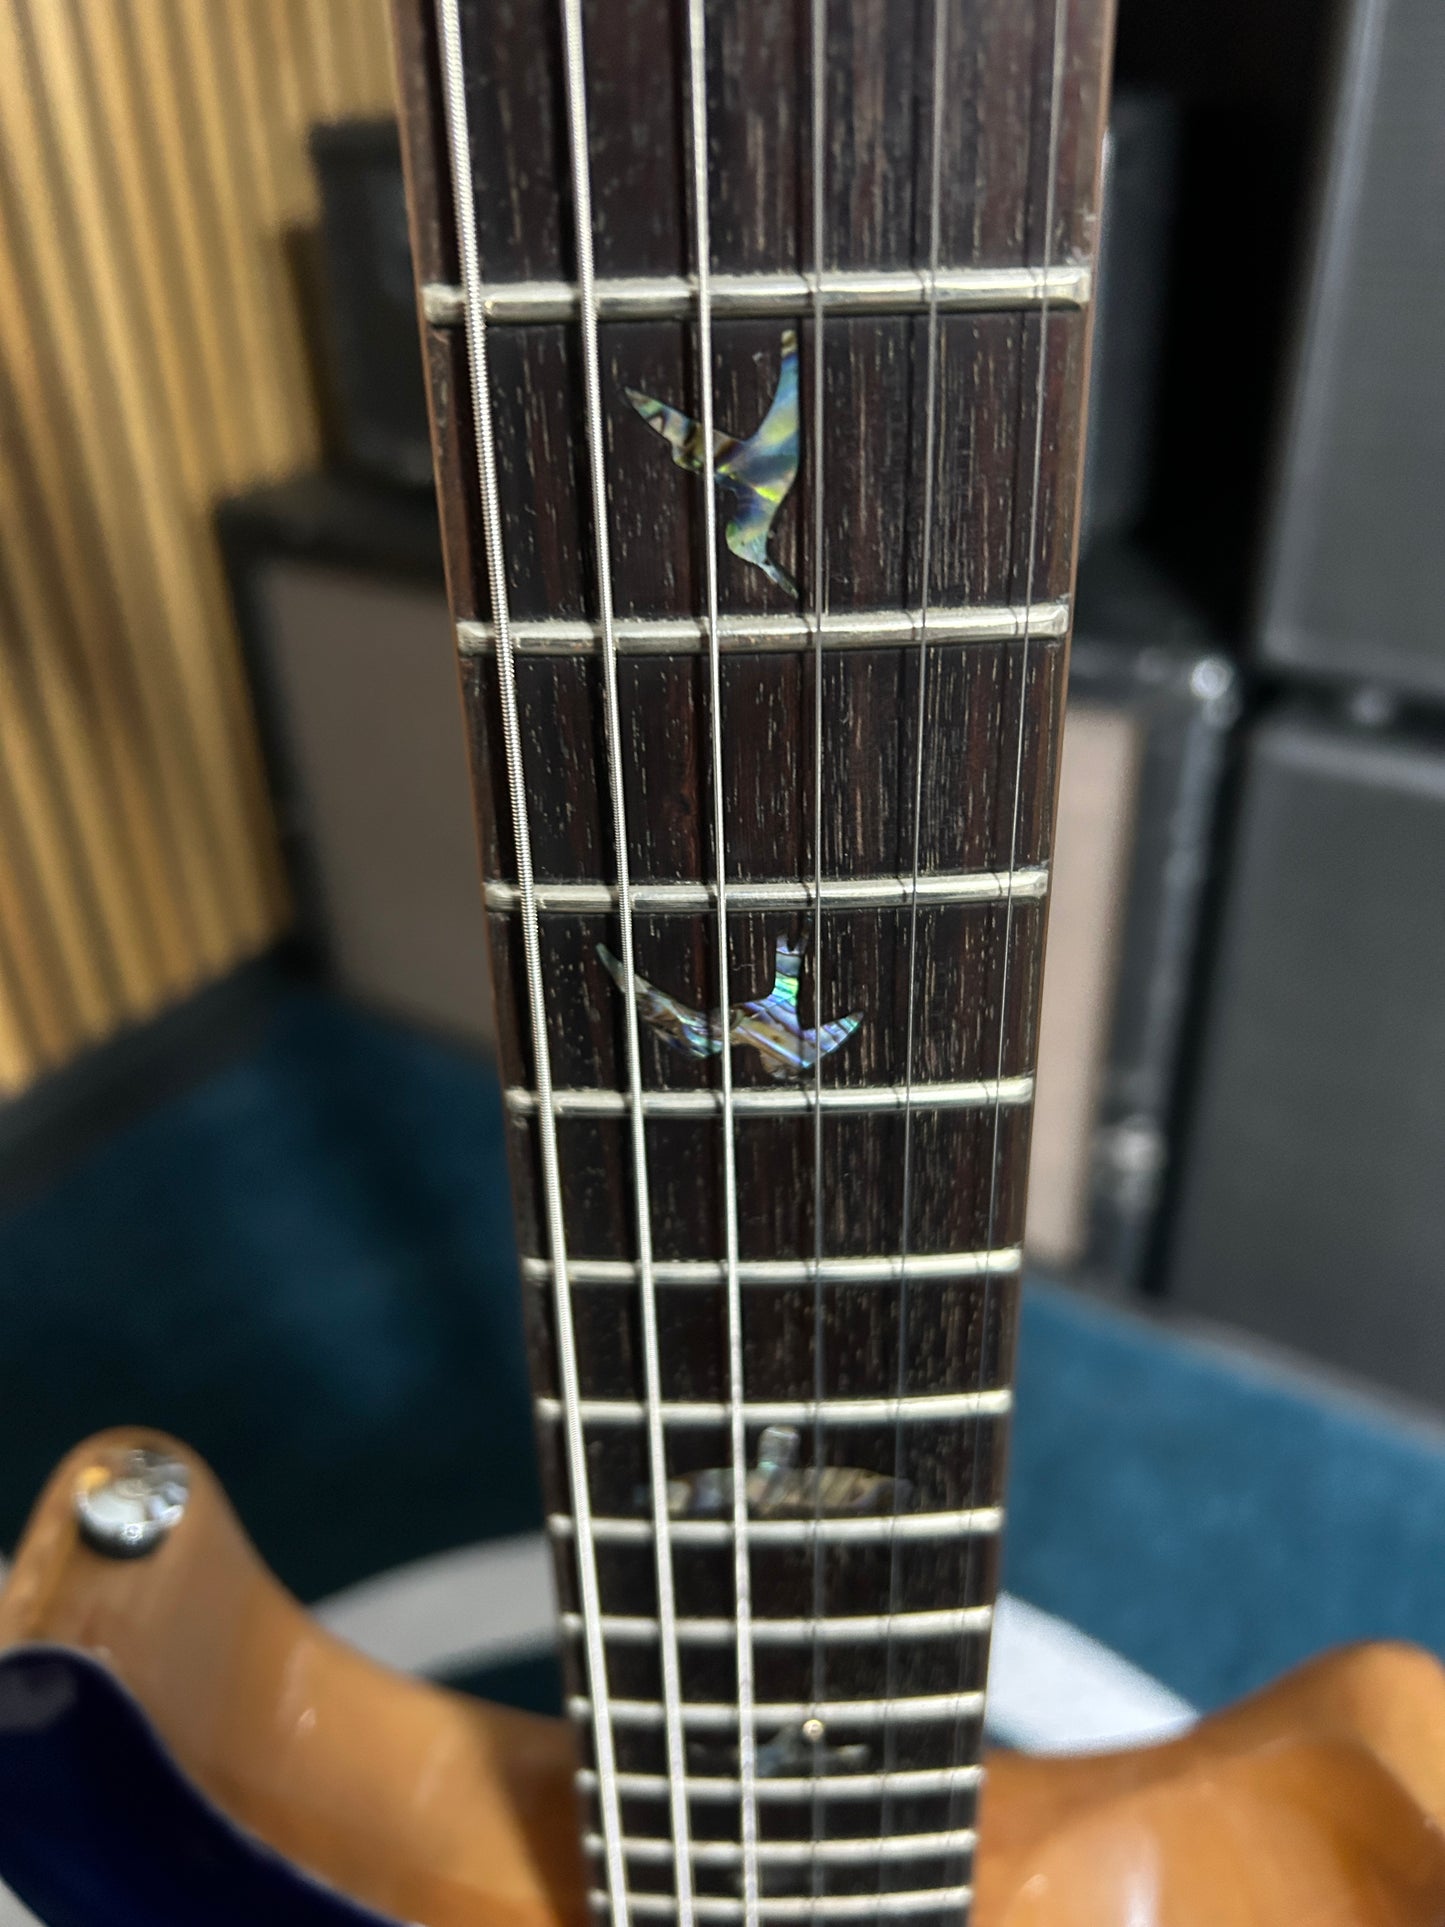 SE Pauls Guitar - Faded Blue